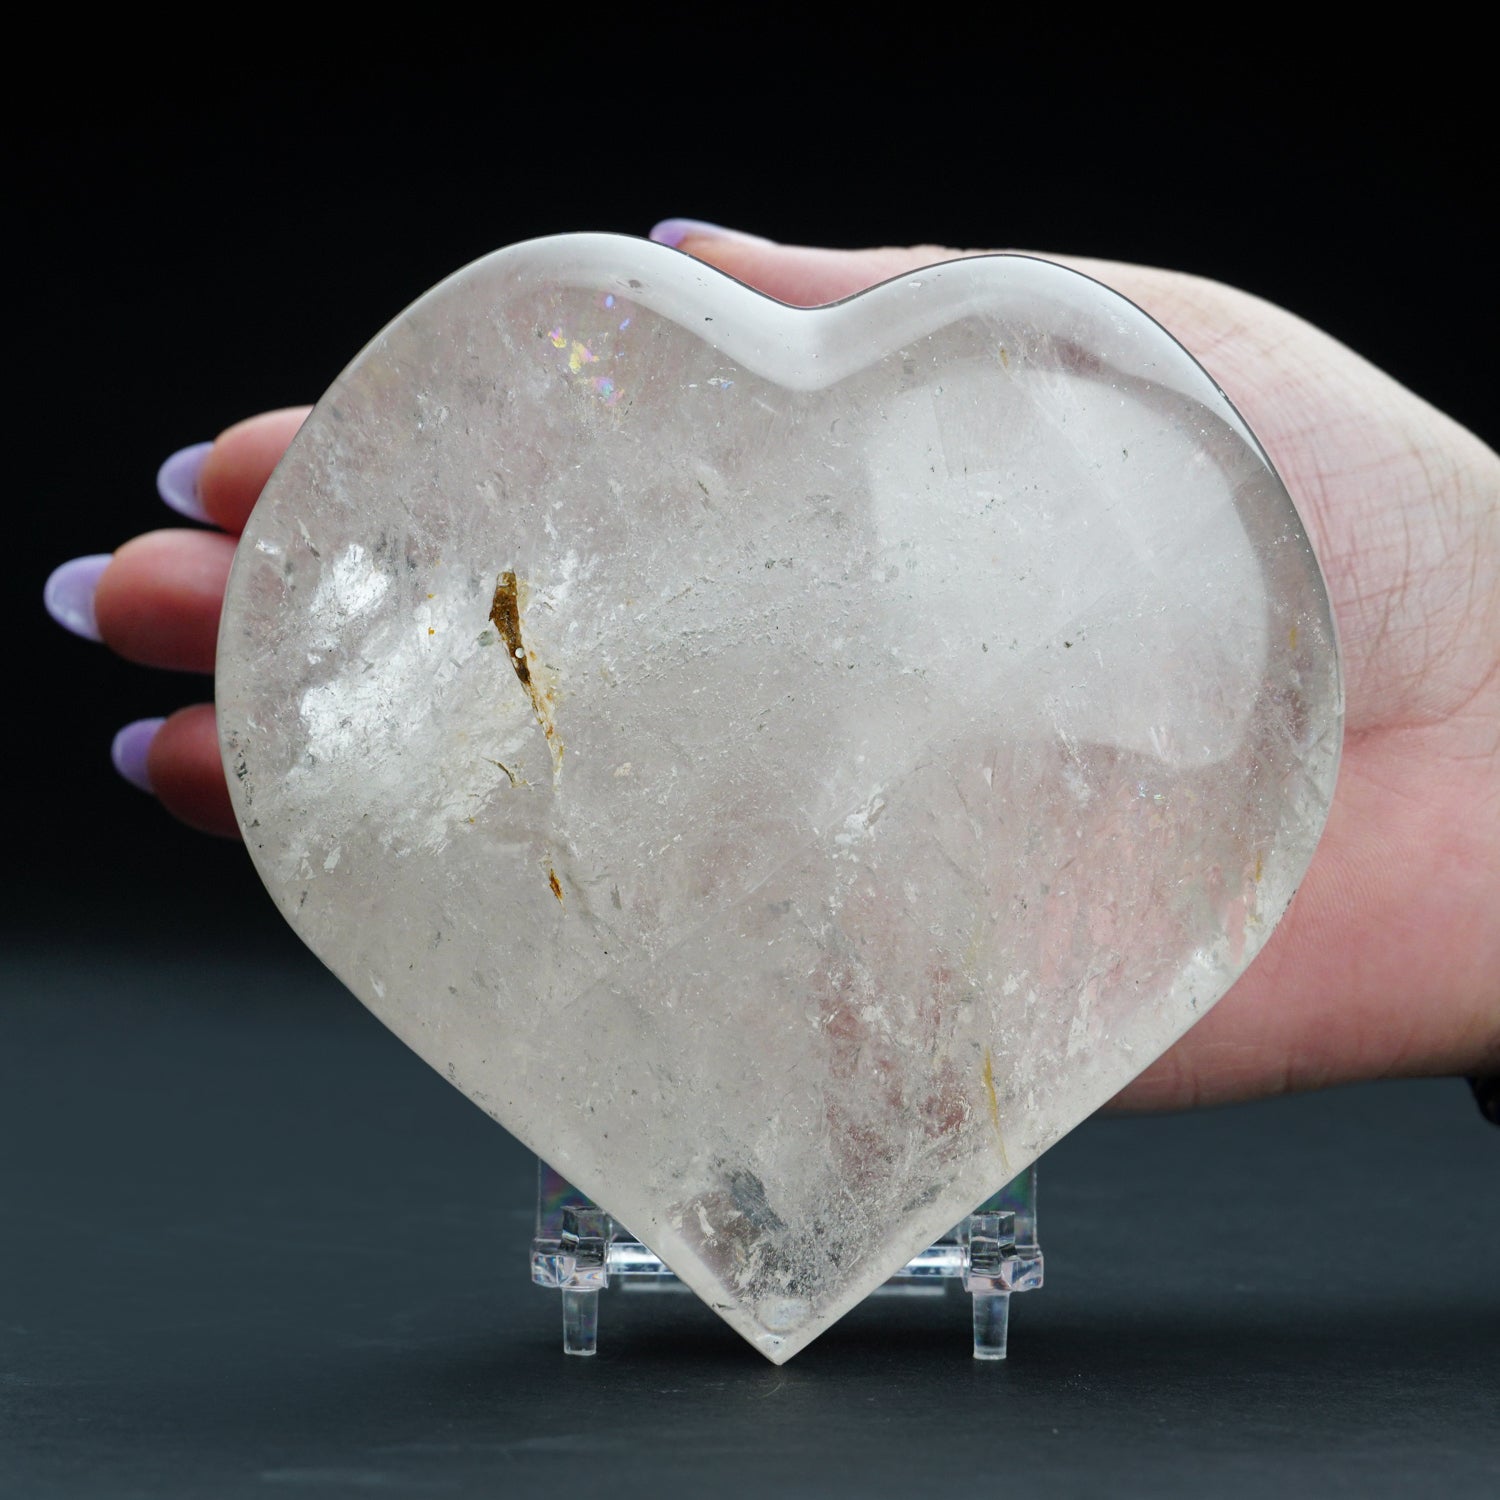 Genuine Polished Clear Quartz Heart From Brazil (1.8 lbs)